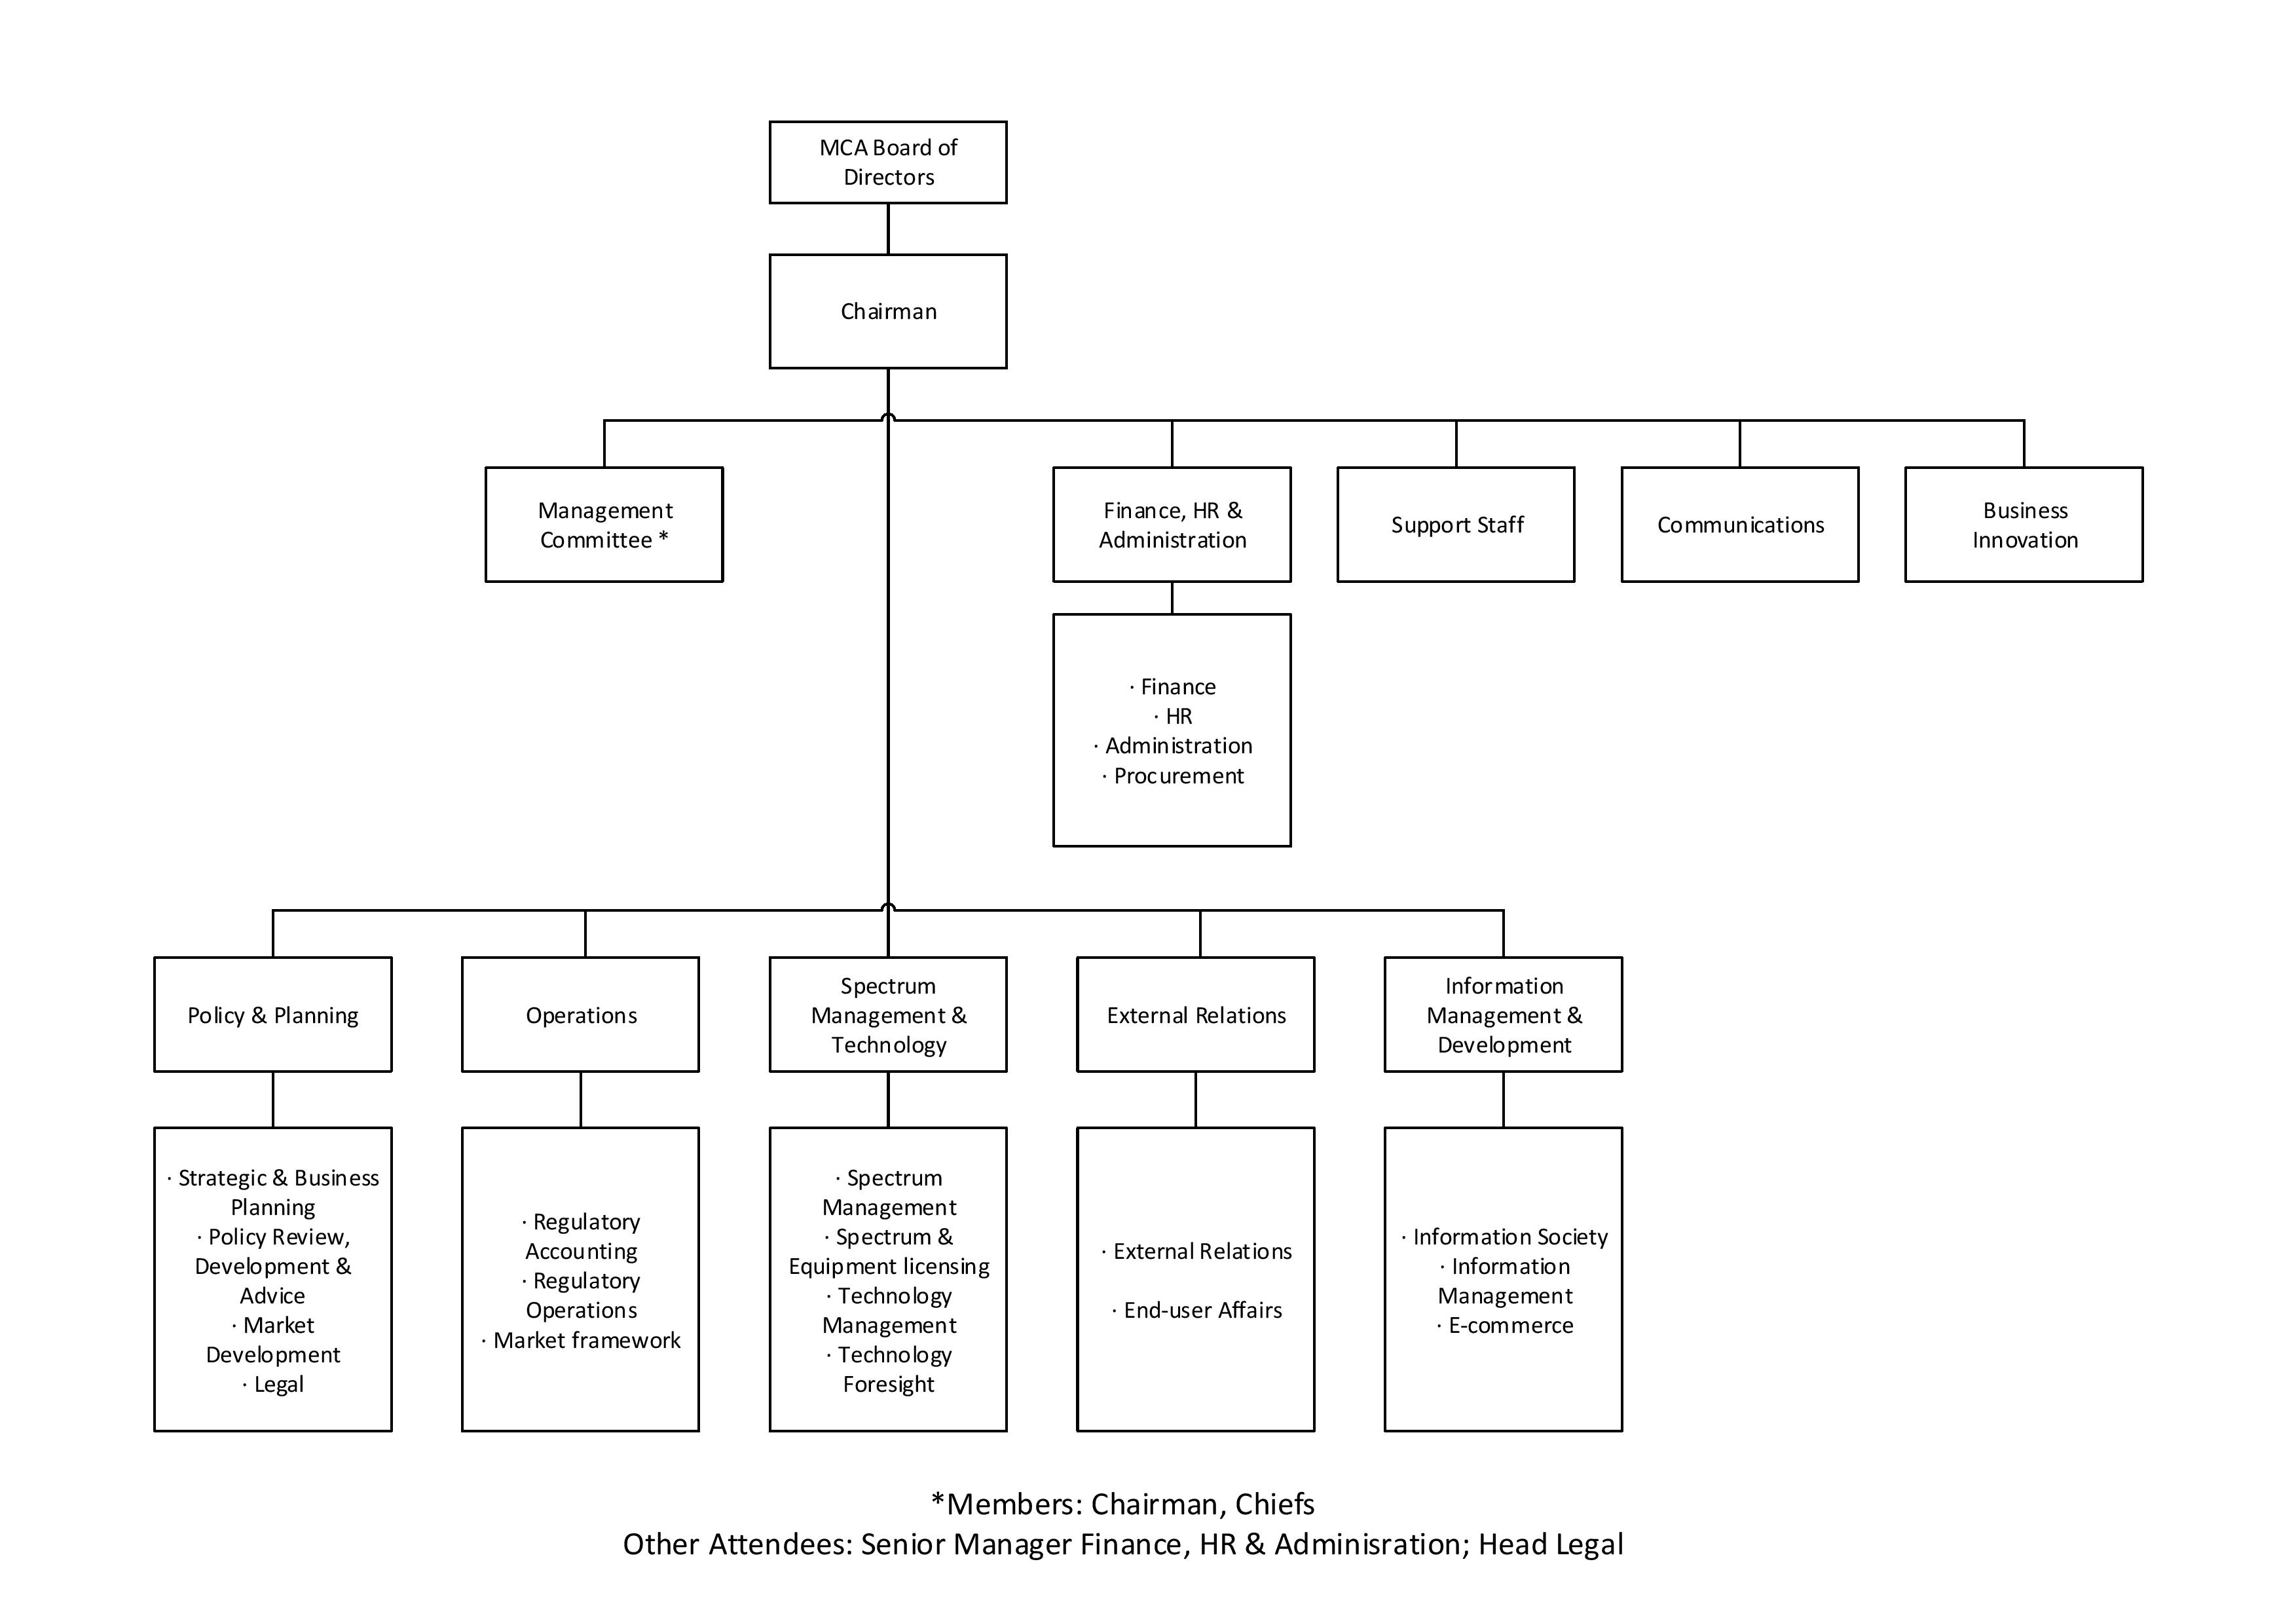 Organisation Structure | Malta Communications Authority